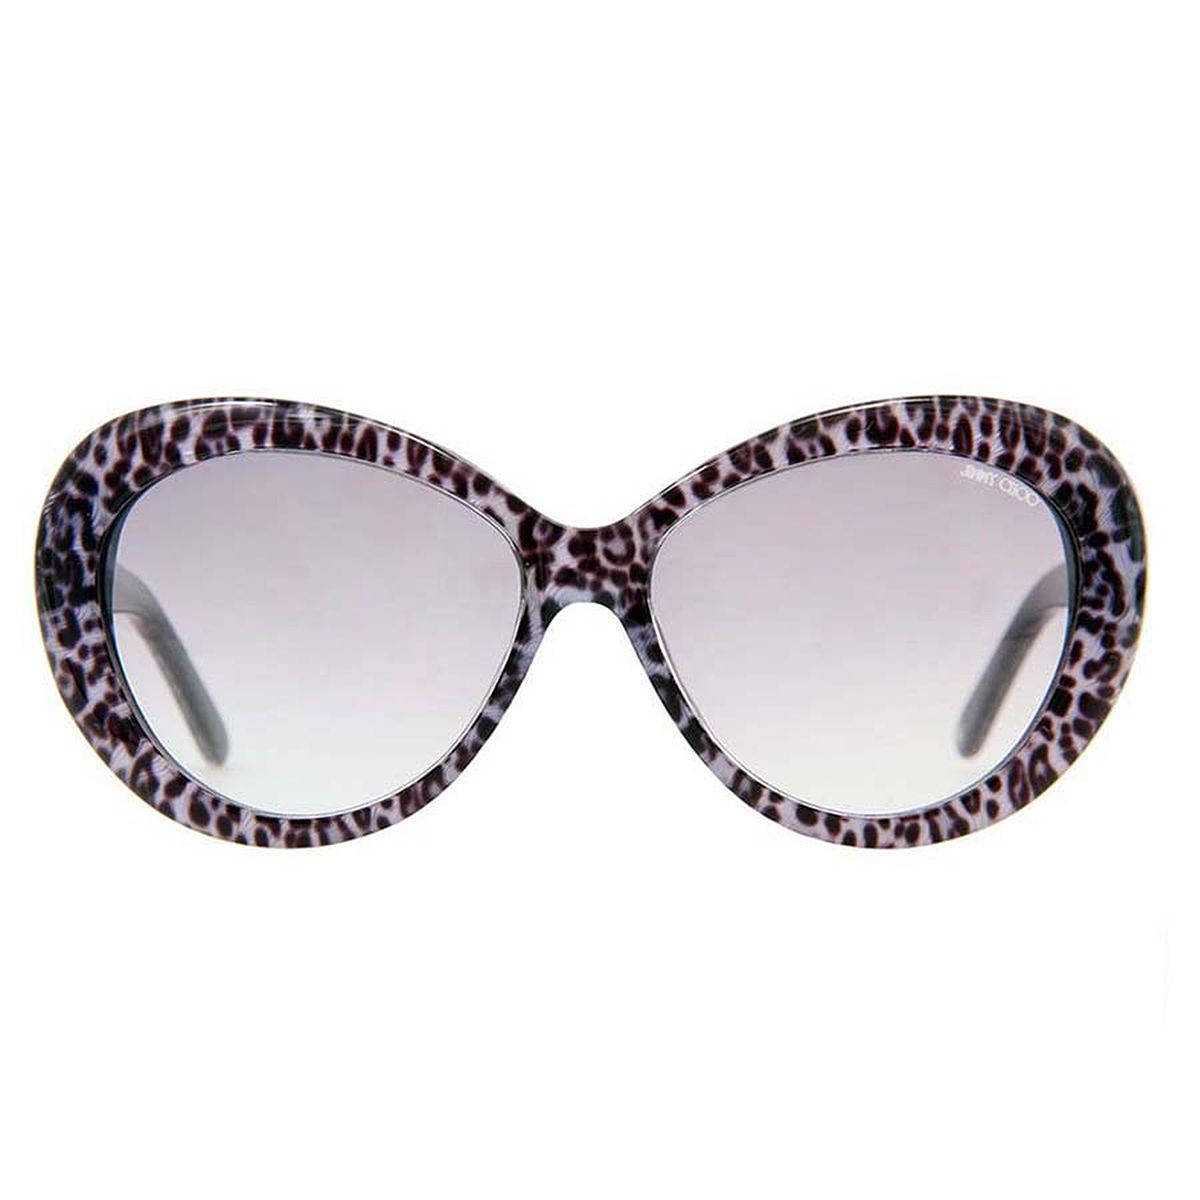 Jimmy Choo | Accessories | Jimmy Choo Sunglasses Lucines 879o Authentic New  | Poshmark